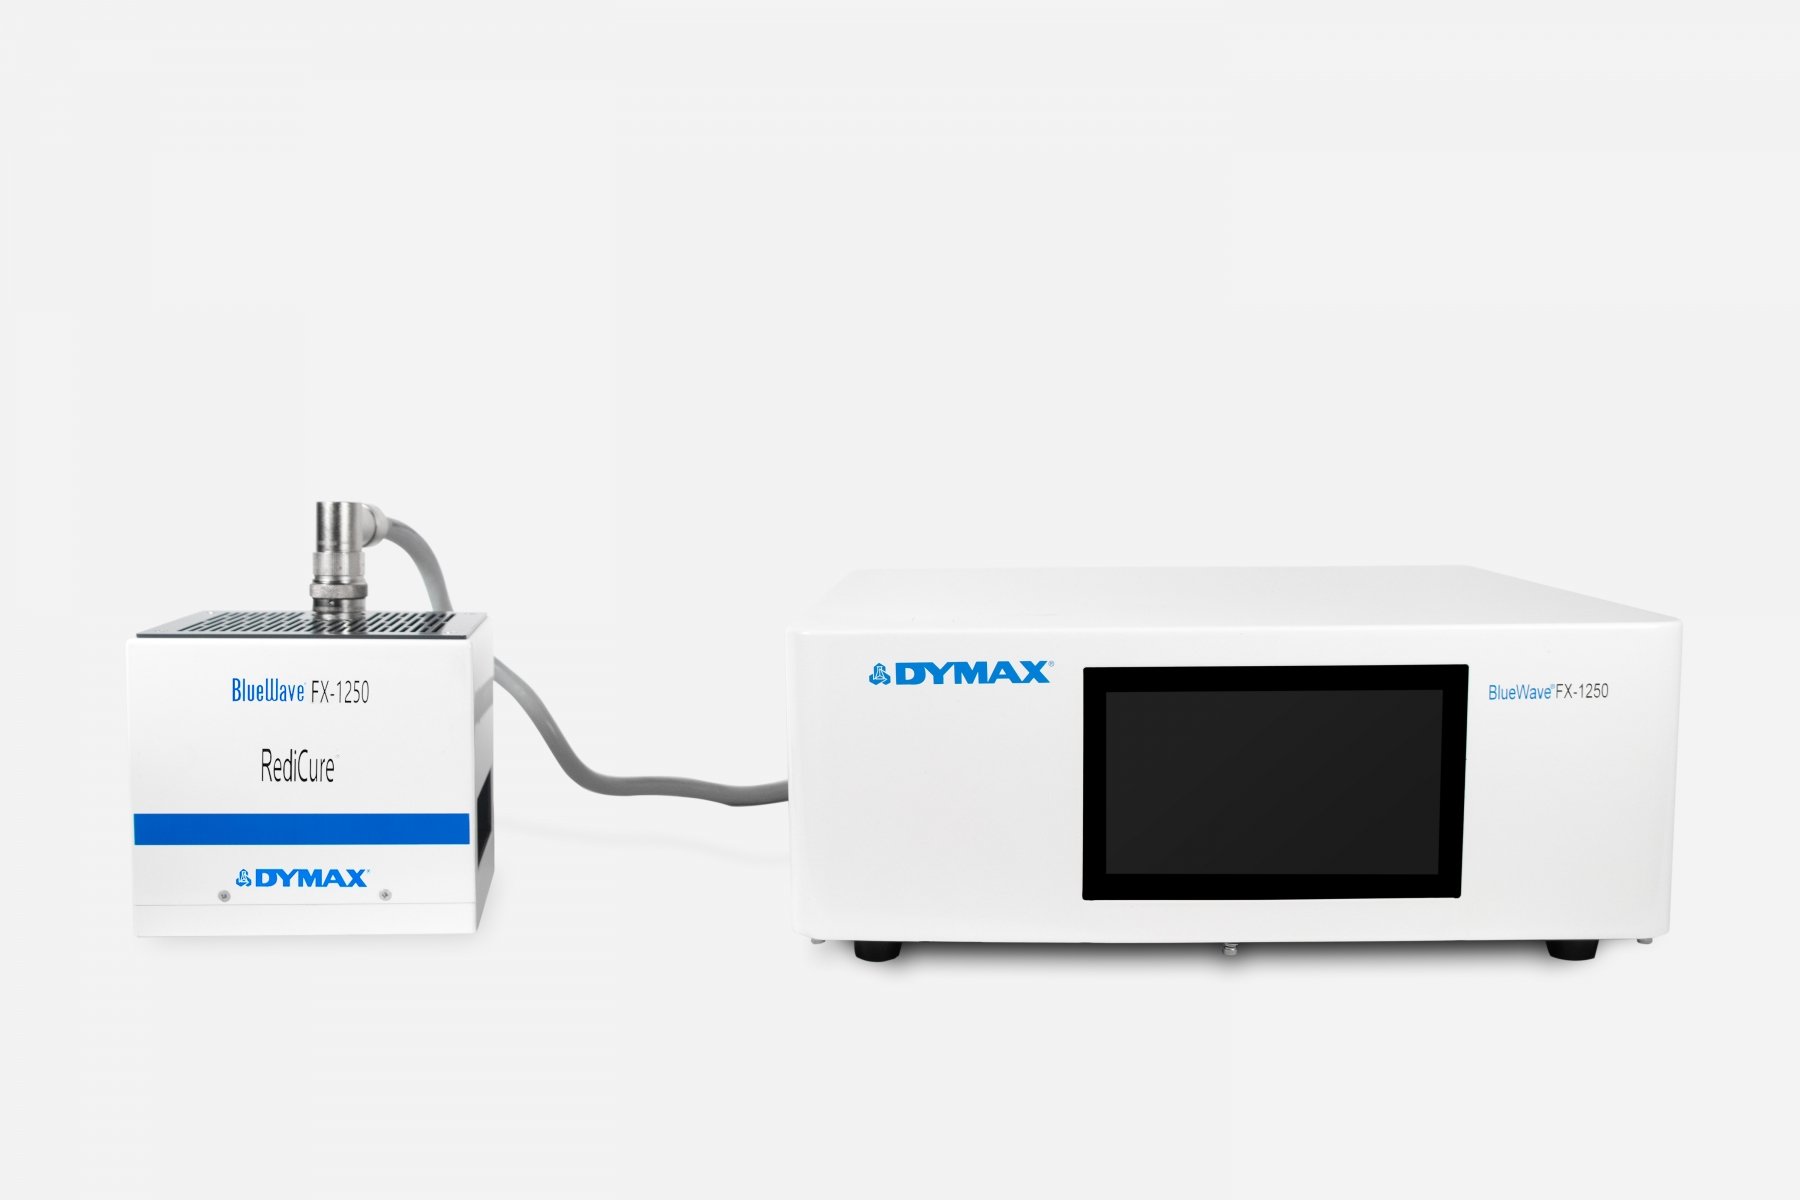 Bluewave FX-1250 LED 플러드 램프 병렬 - 백색 배경